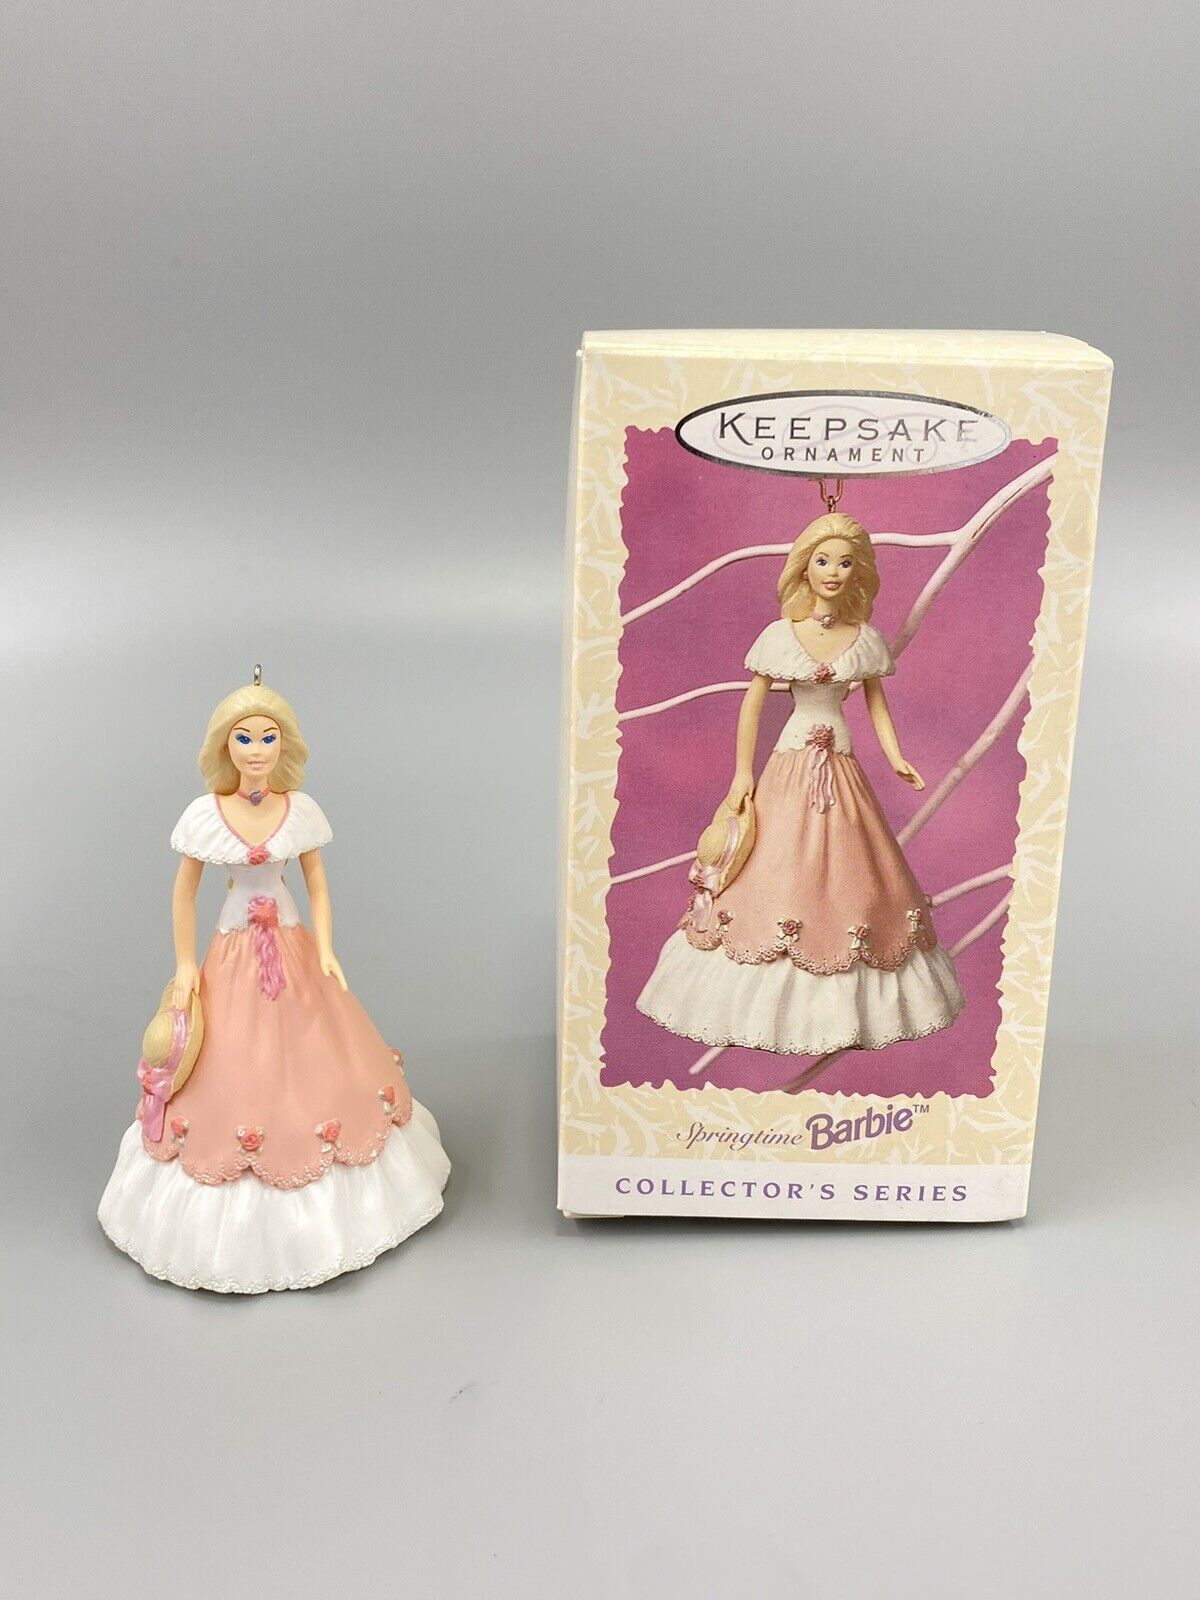 Vintage 1997 Hallmark Springtime Barbie Pink Dress Keepsake Ornament